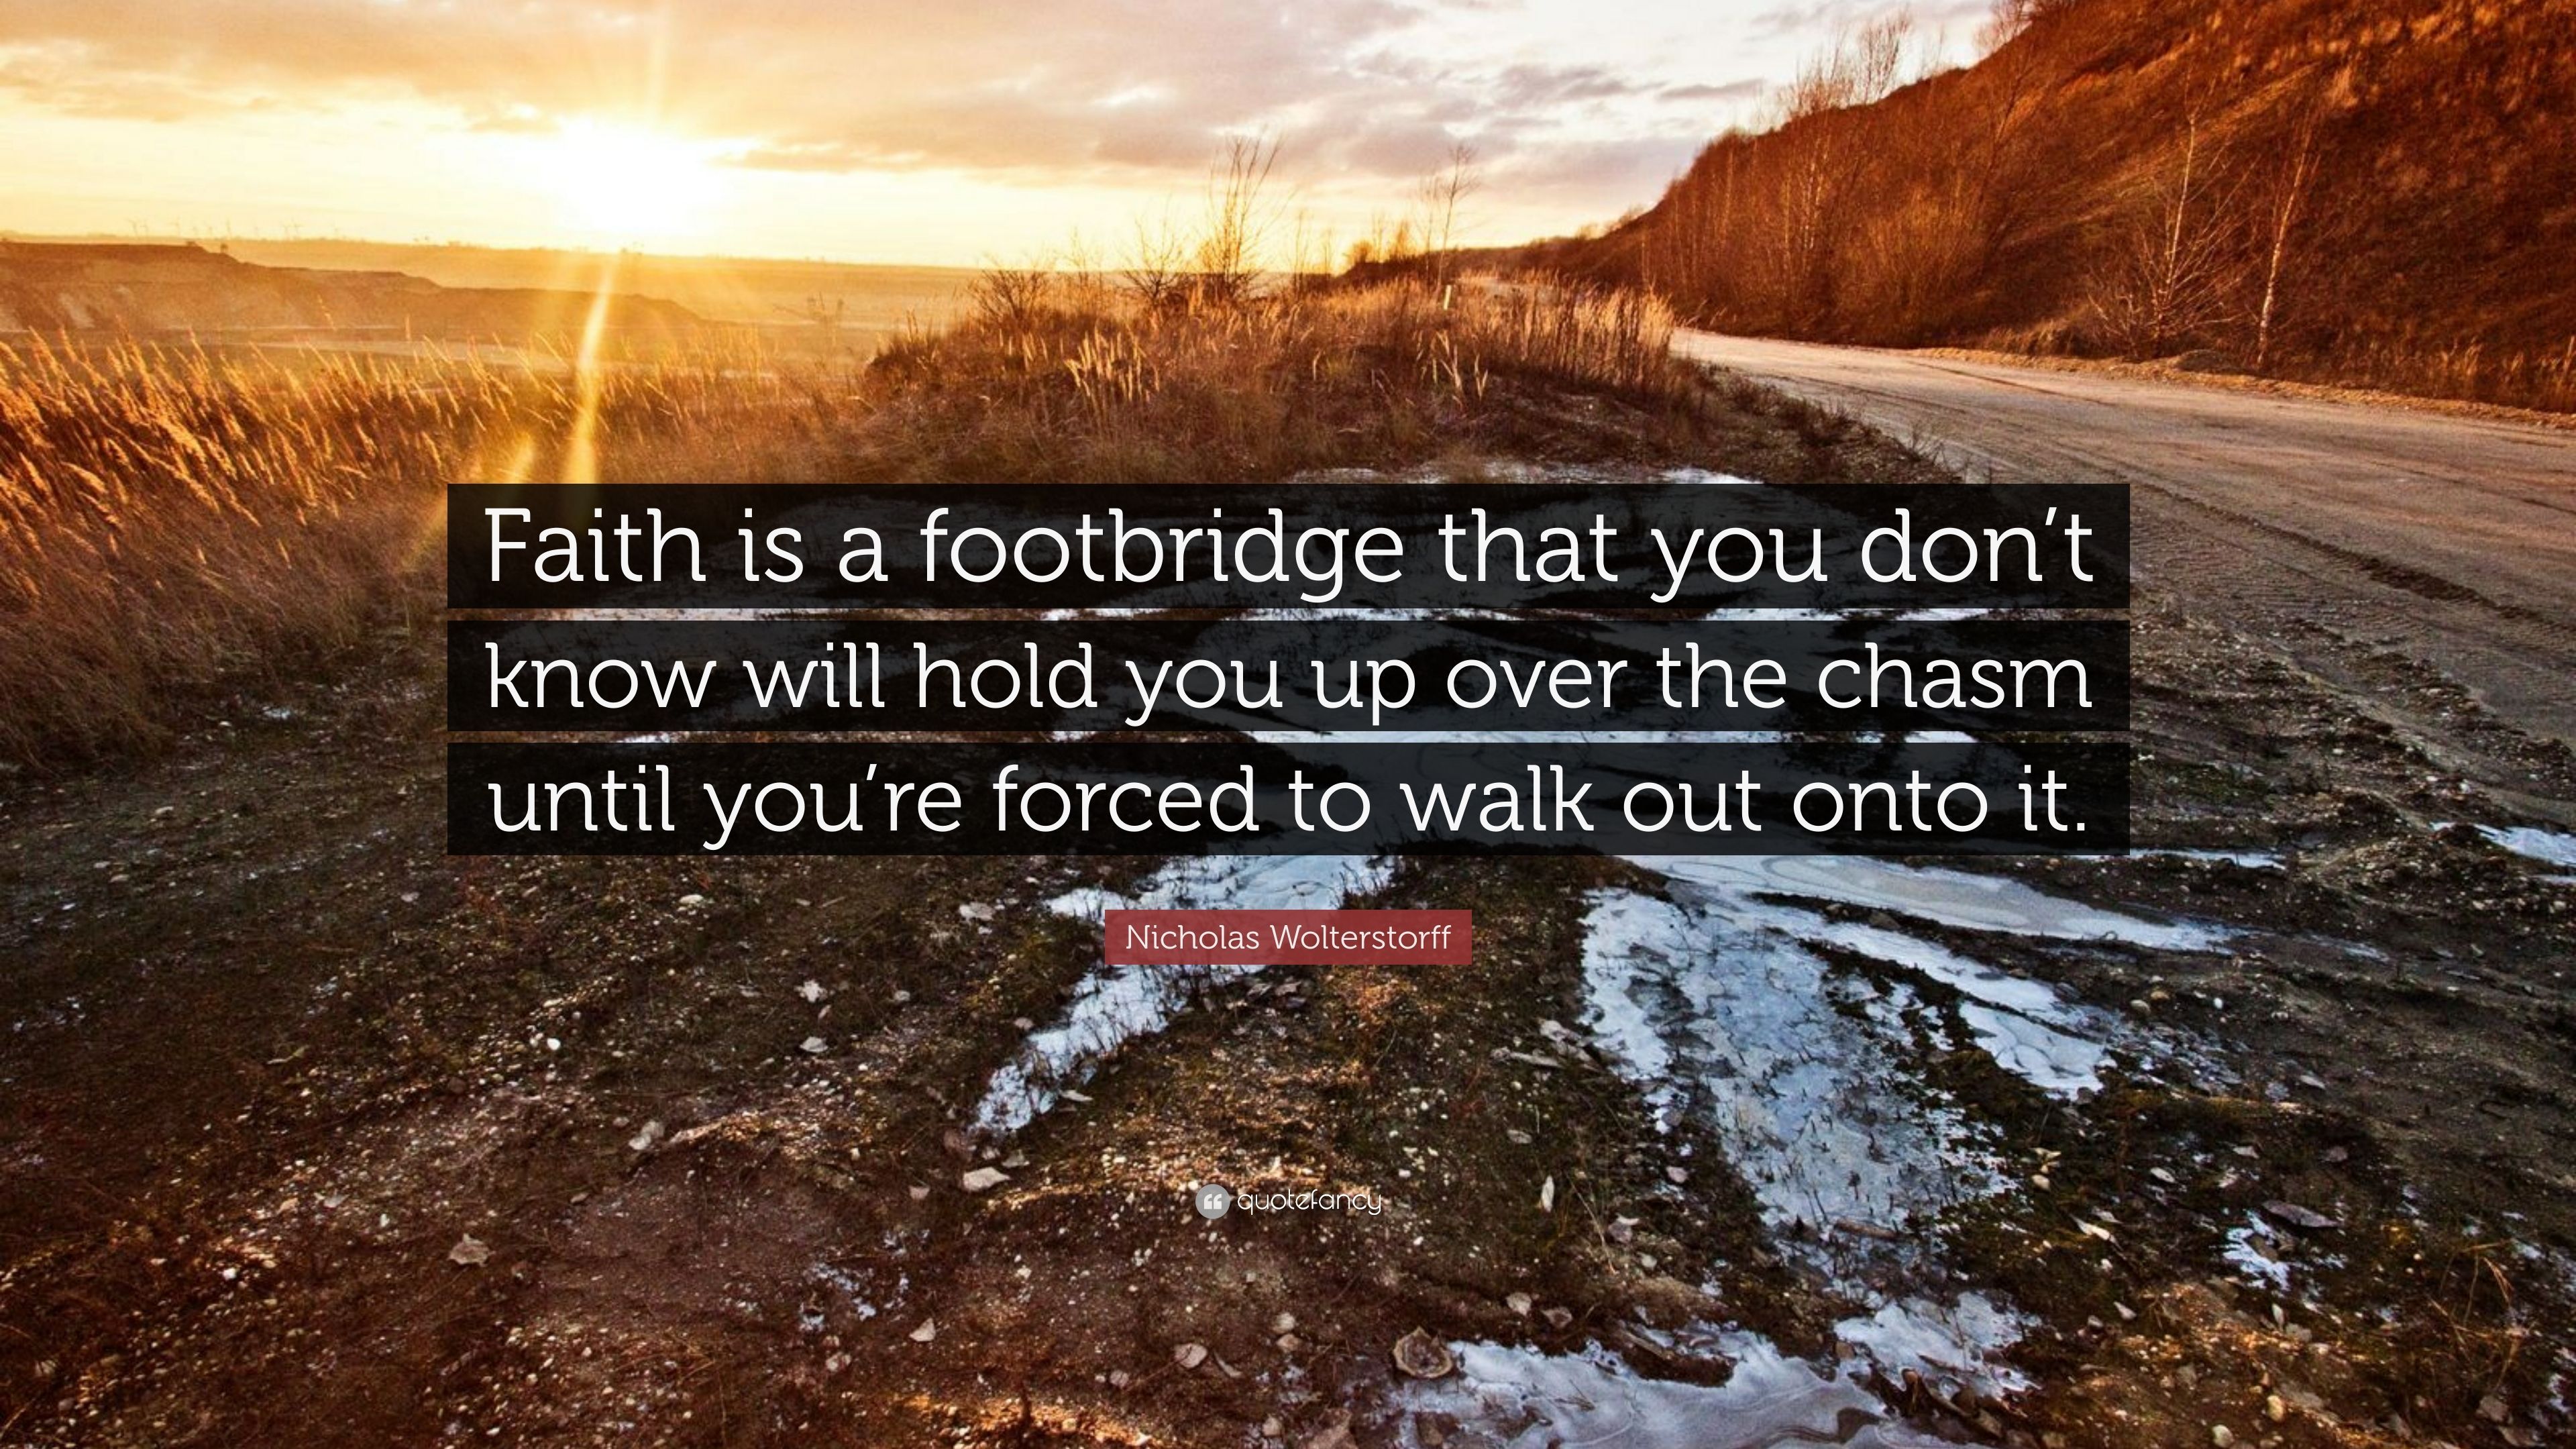 Nicholas Wolterstorff Quote: “Faith is a footbridge that you don't